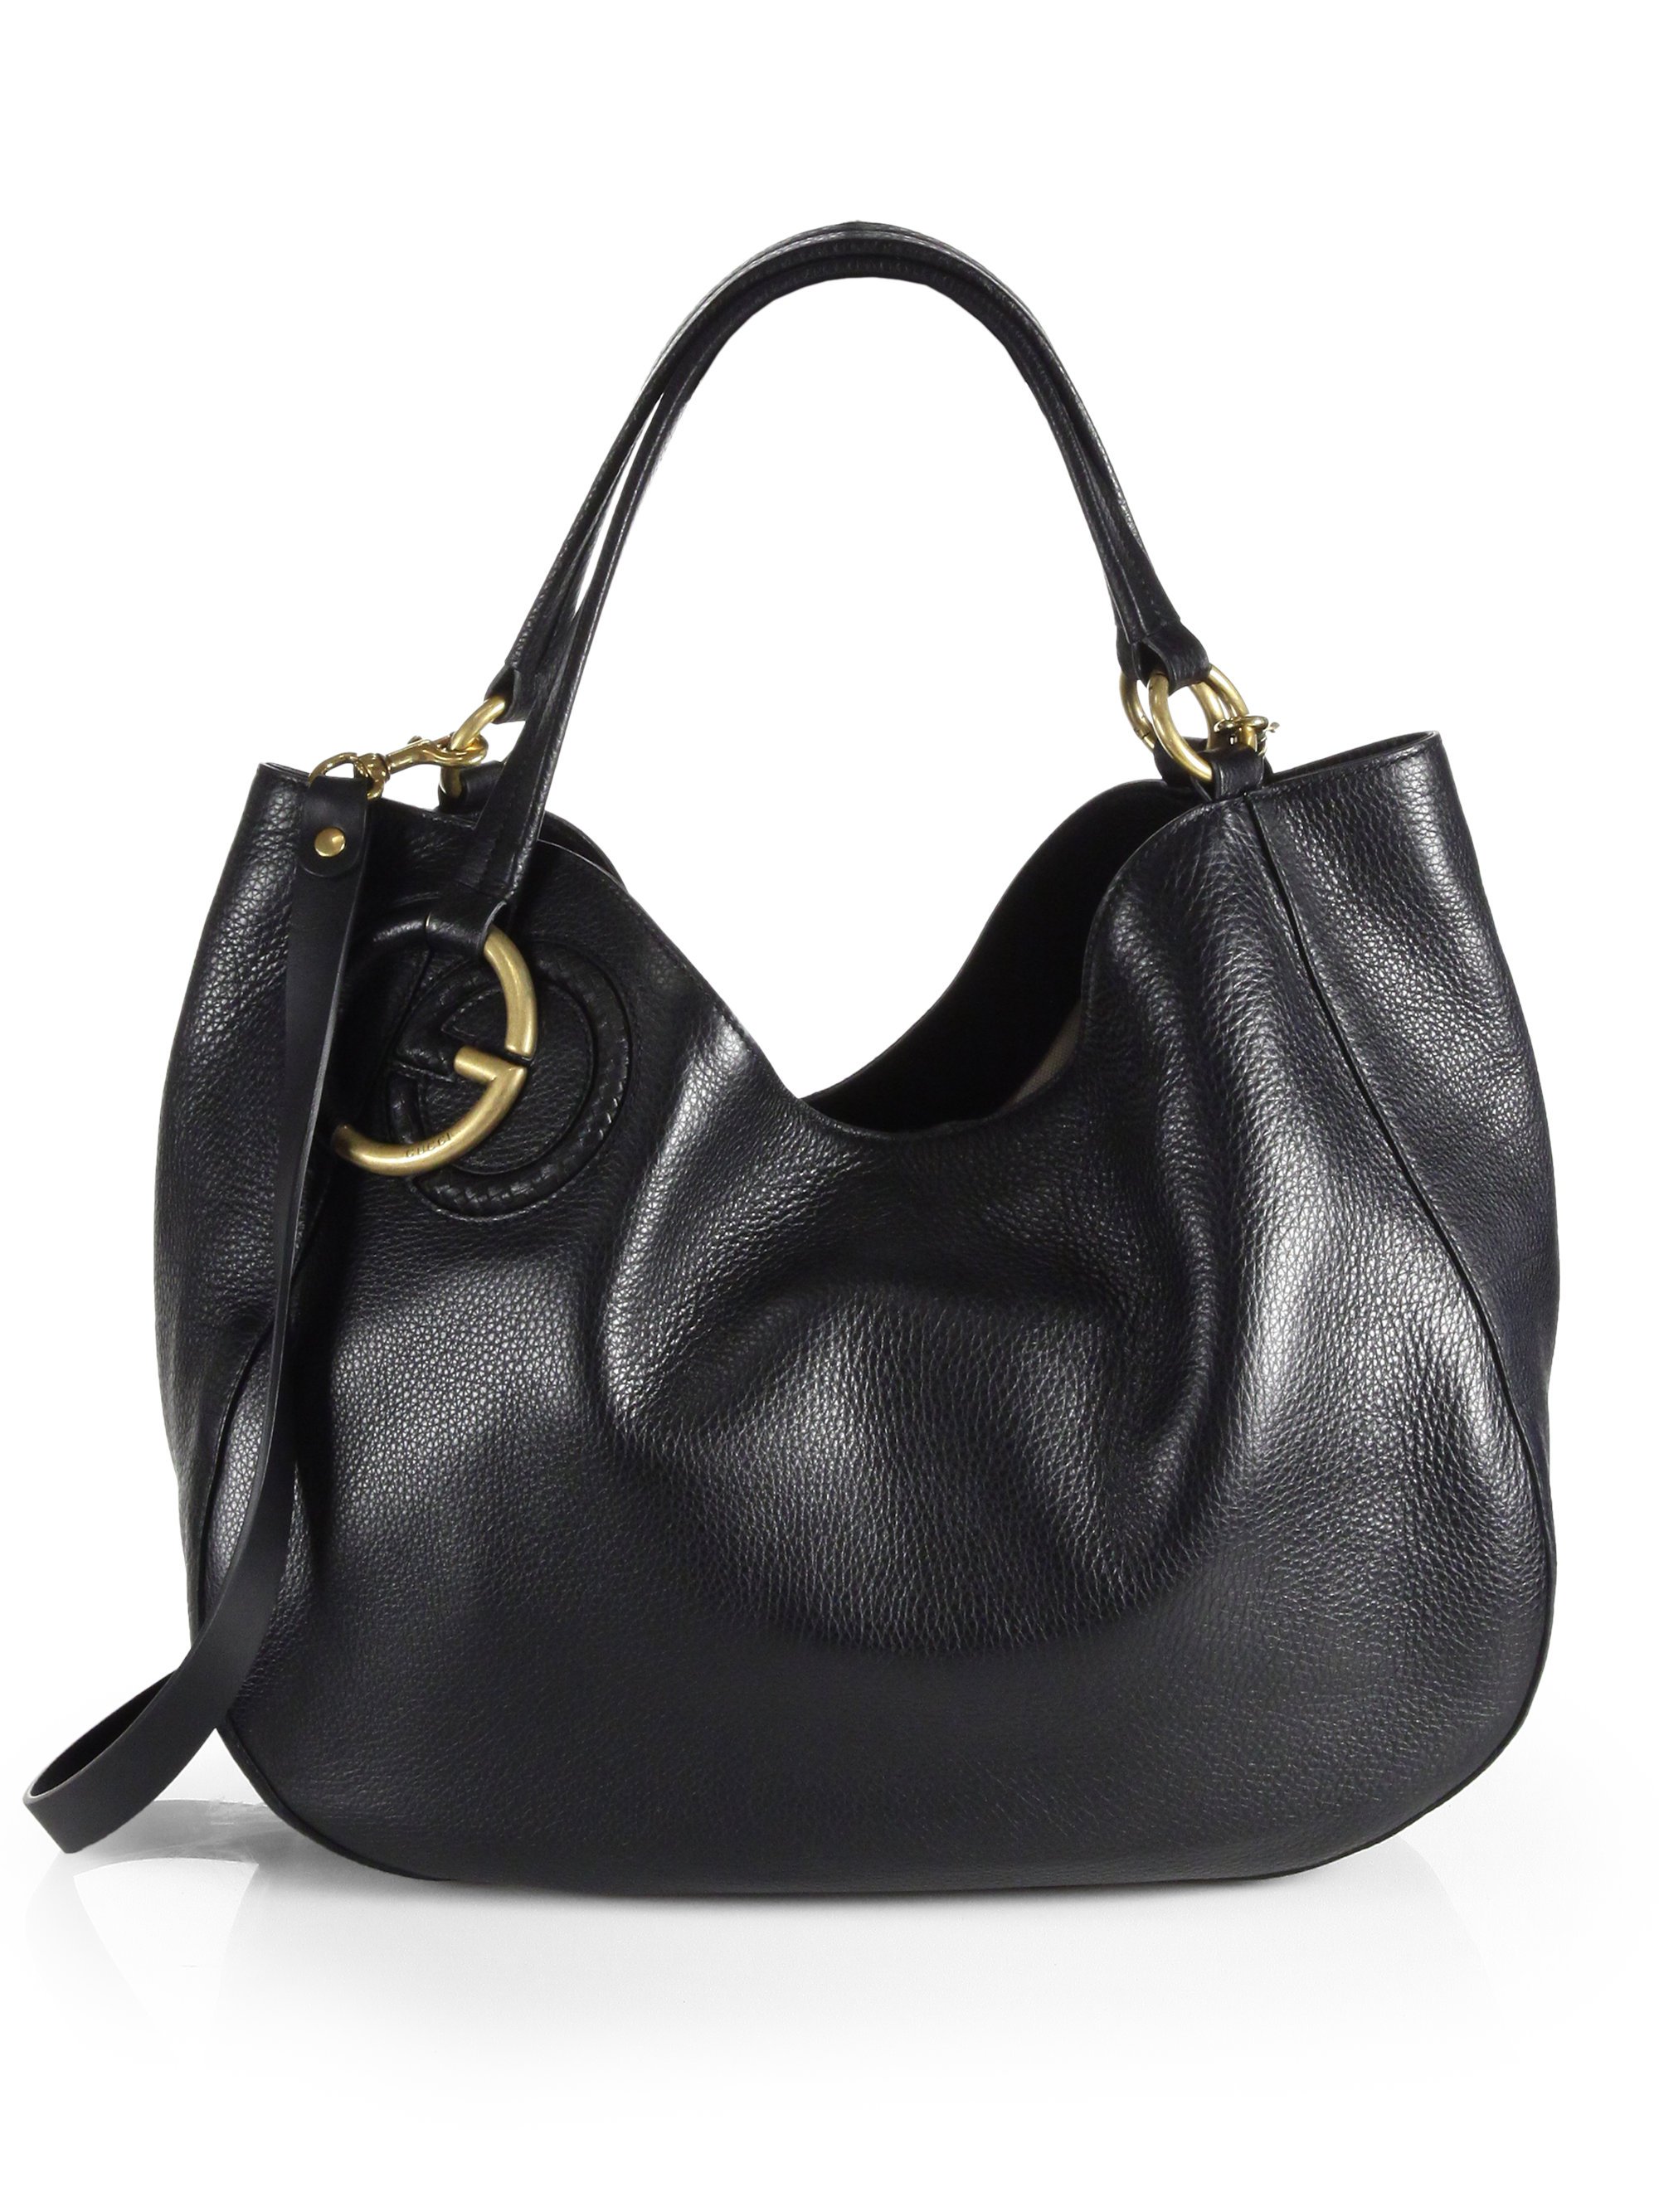 Gucci Black Leather Handbag. Gucci Women&#39;s Leather 2 Way Convertible GG Charm Small Dome Purse ...